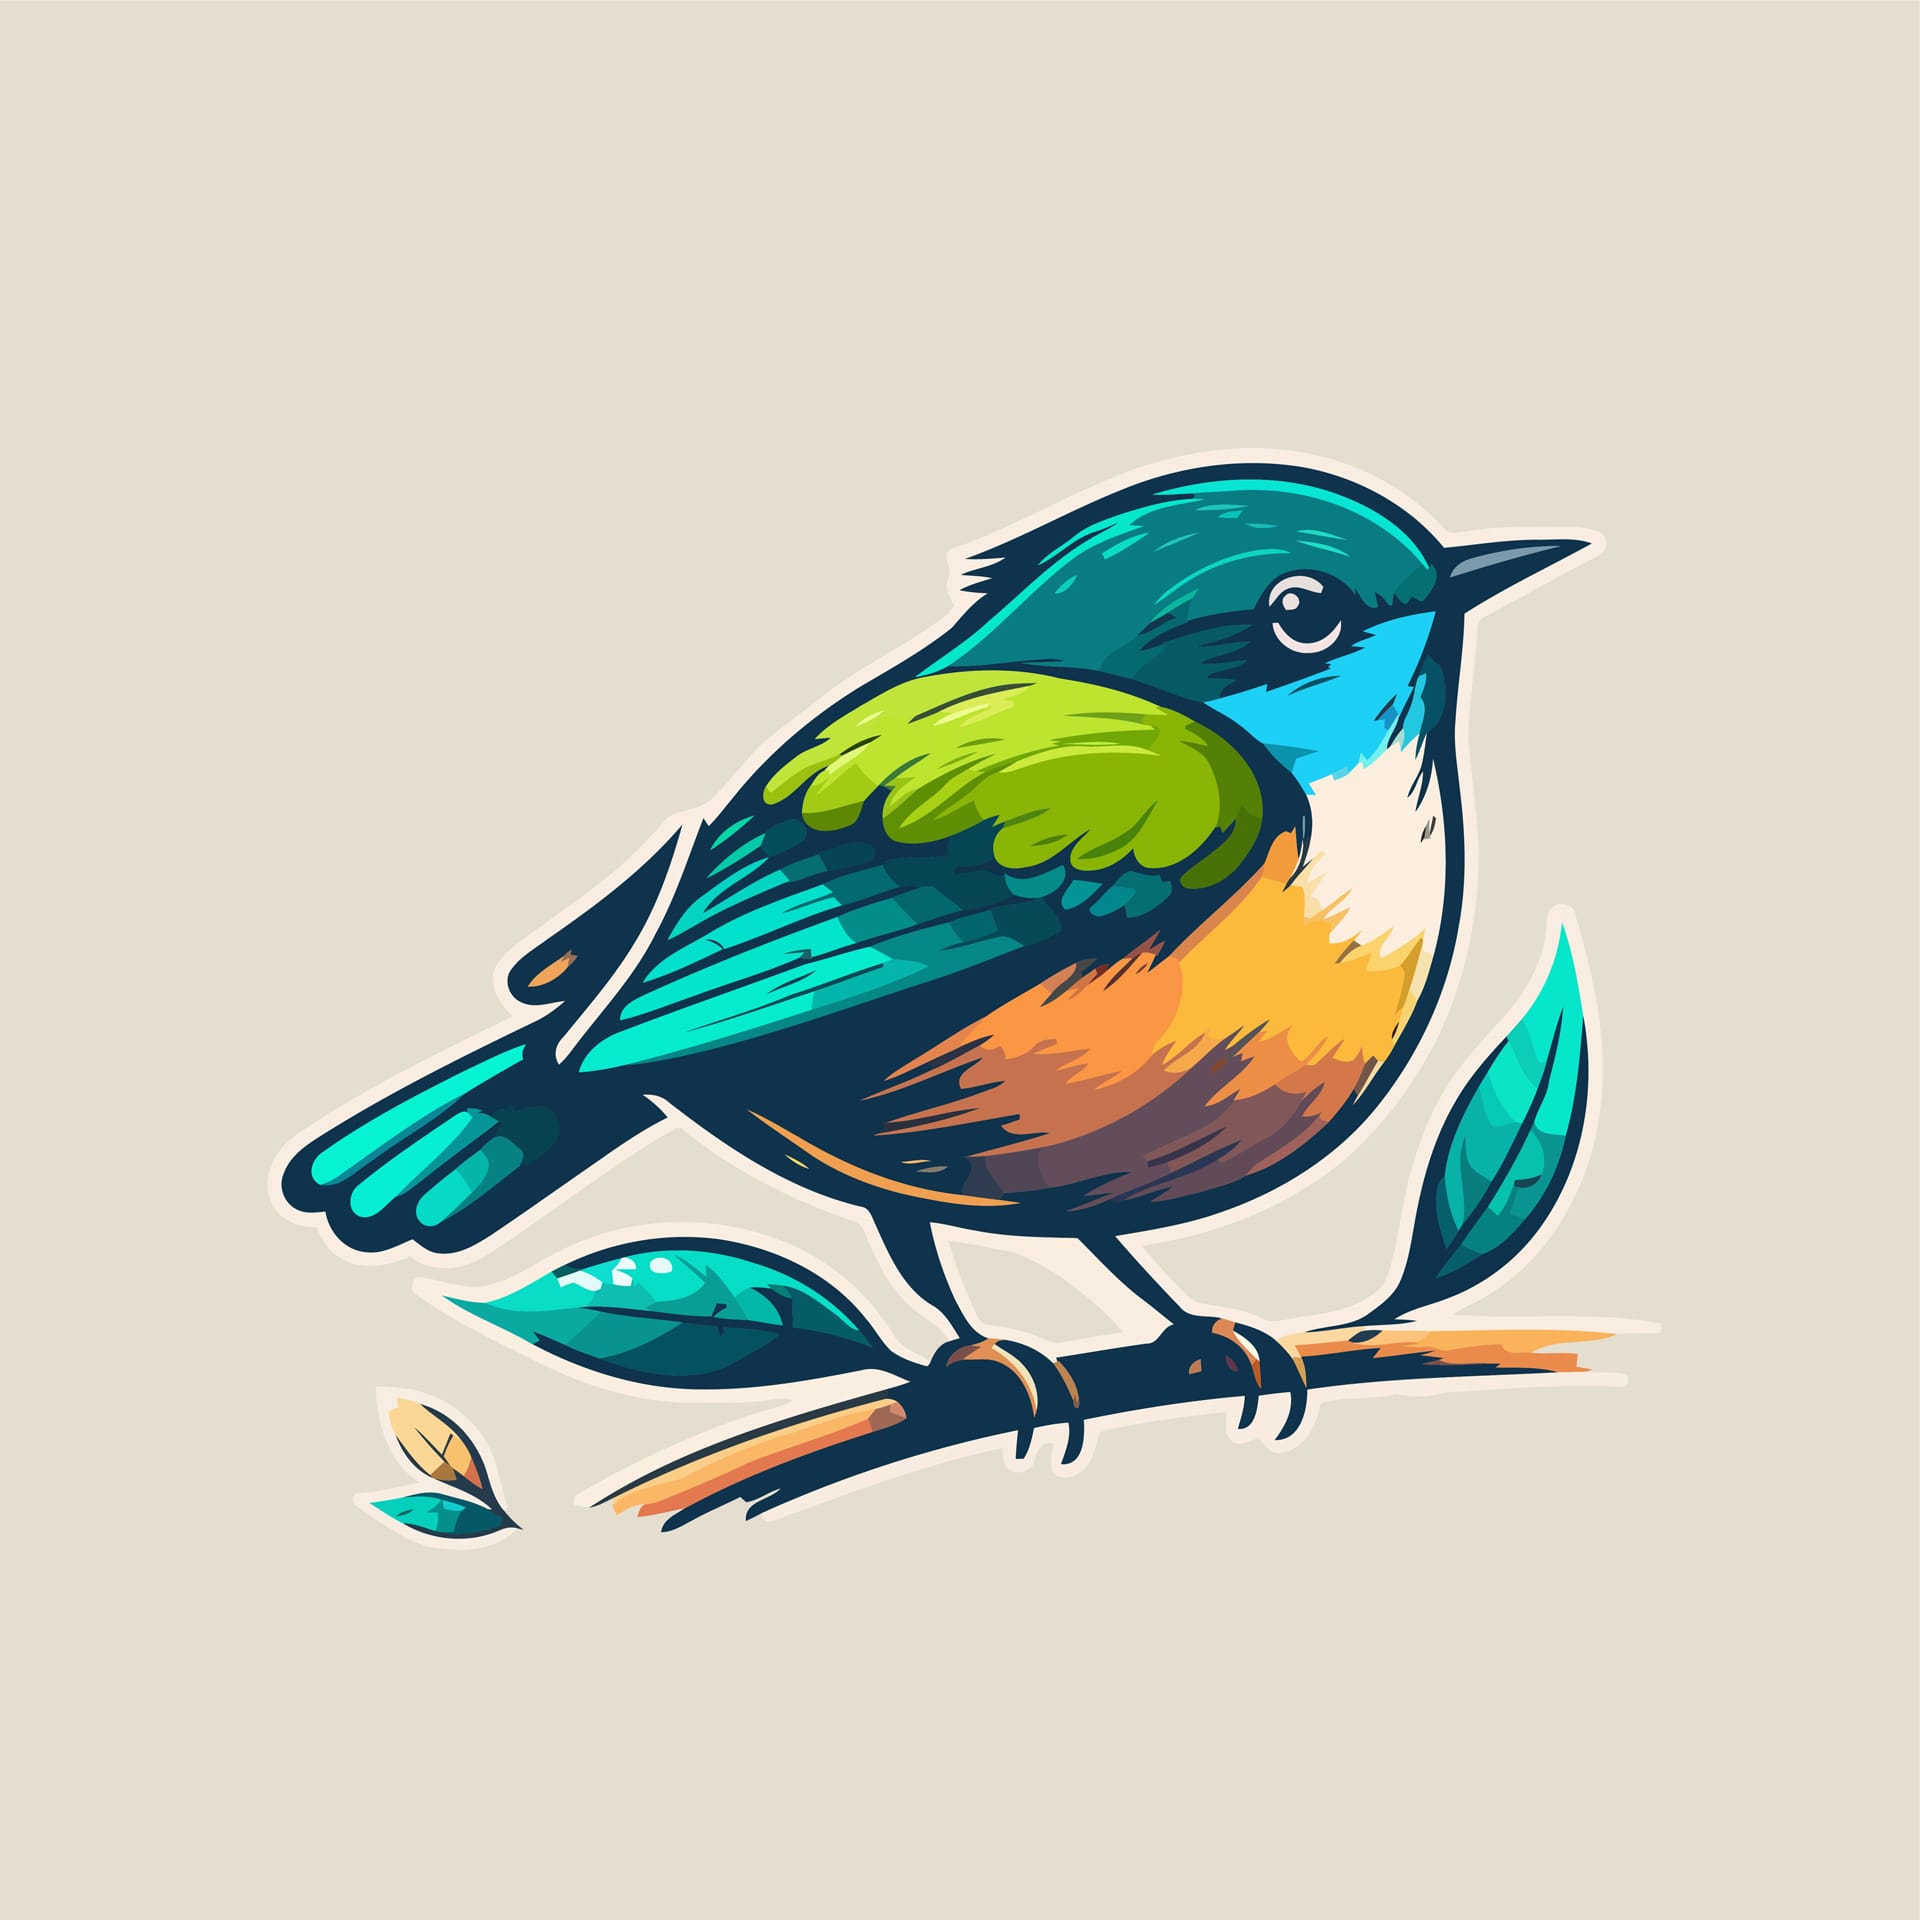 Little bird cartoon animal illustration logo mascot icon balanced image